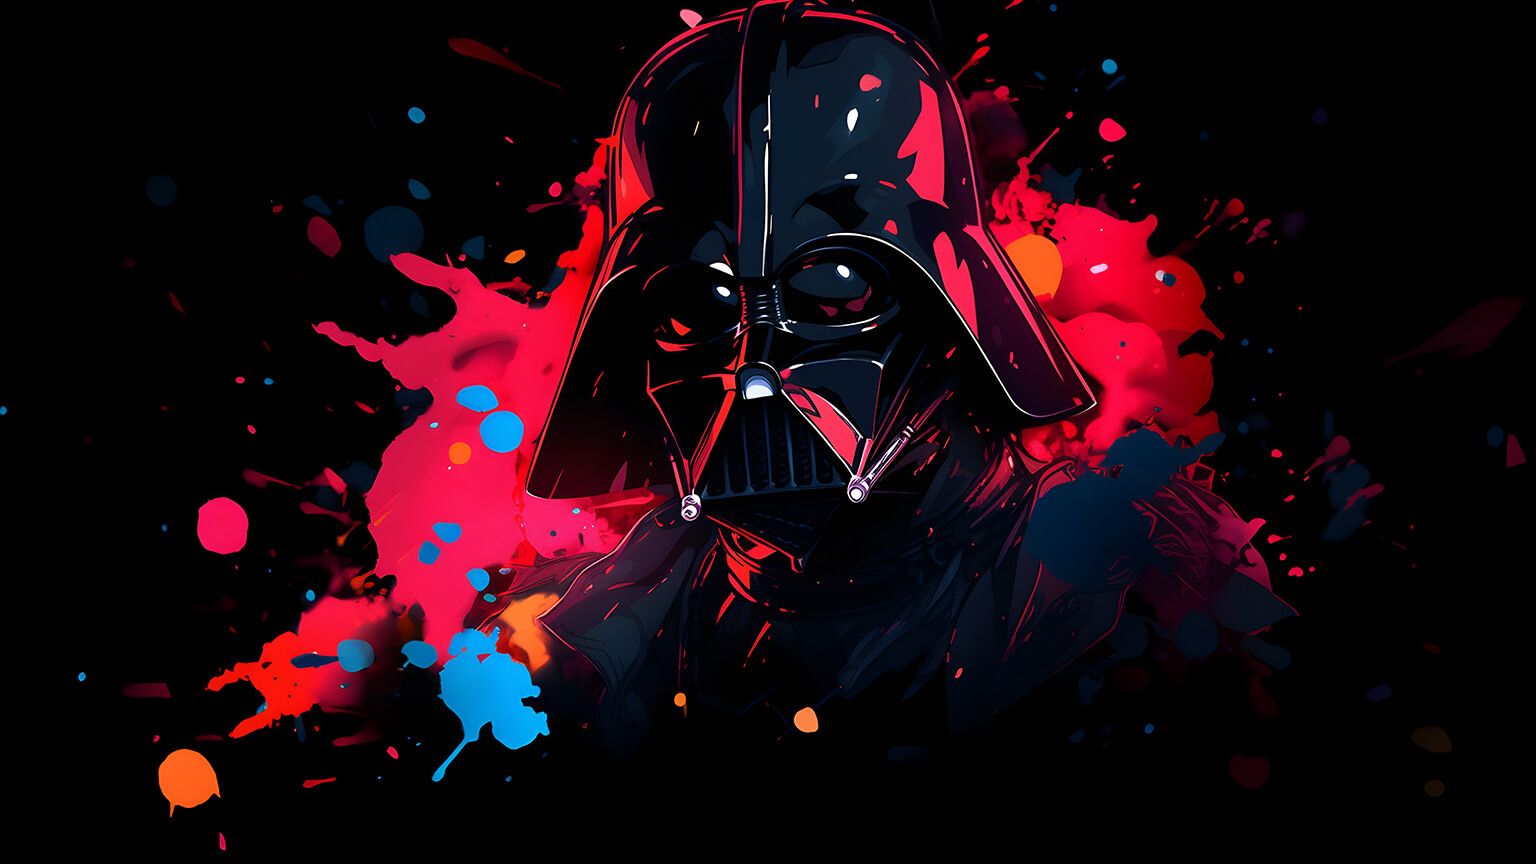 Star Wars Darth Vader Dark Red Wallpaper for Desktop & Laptop